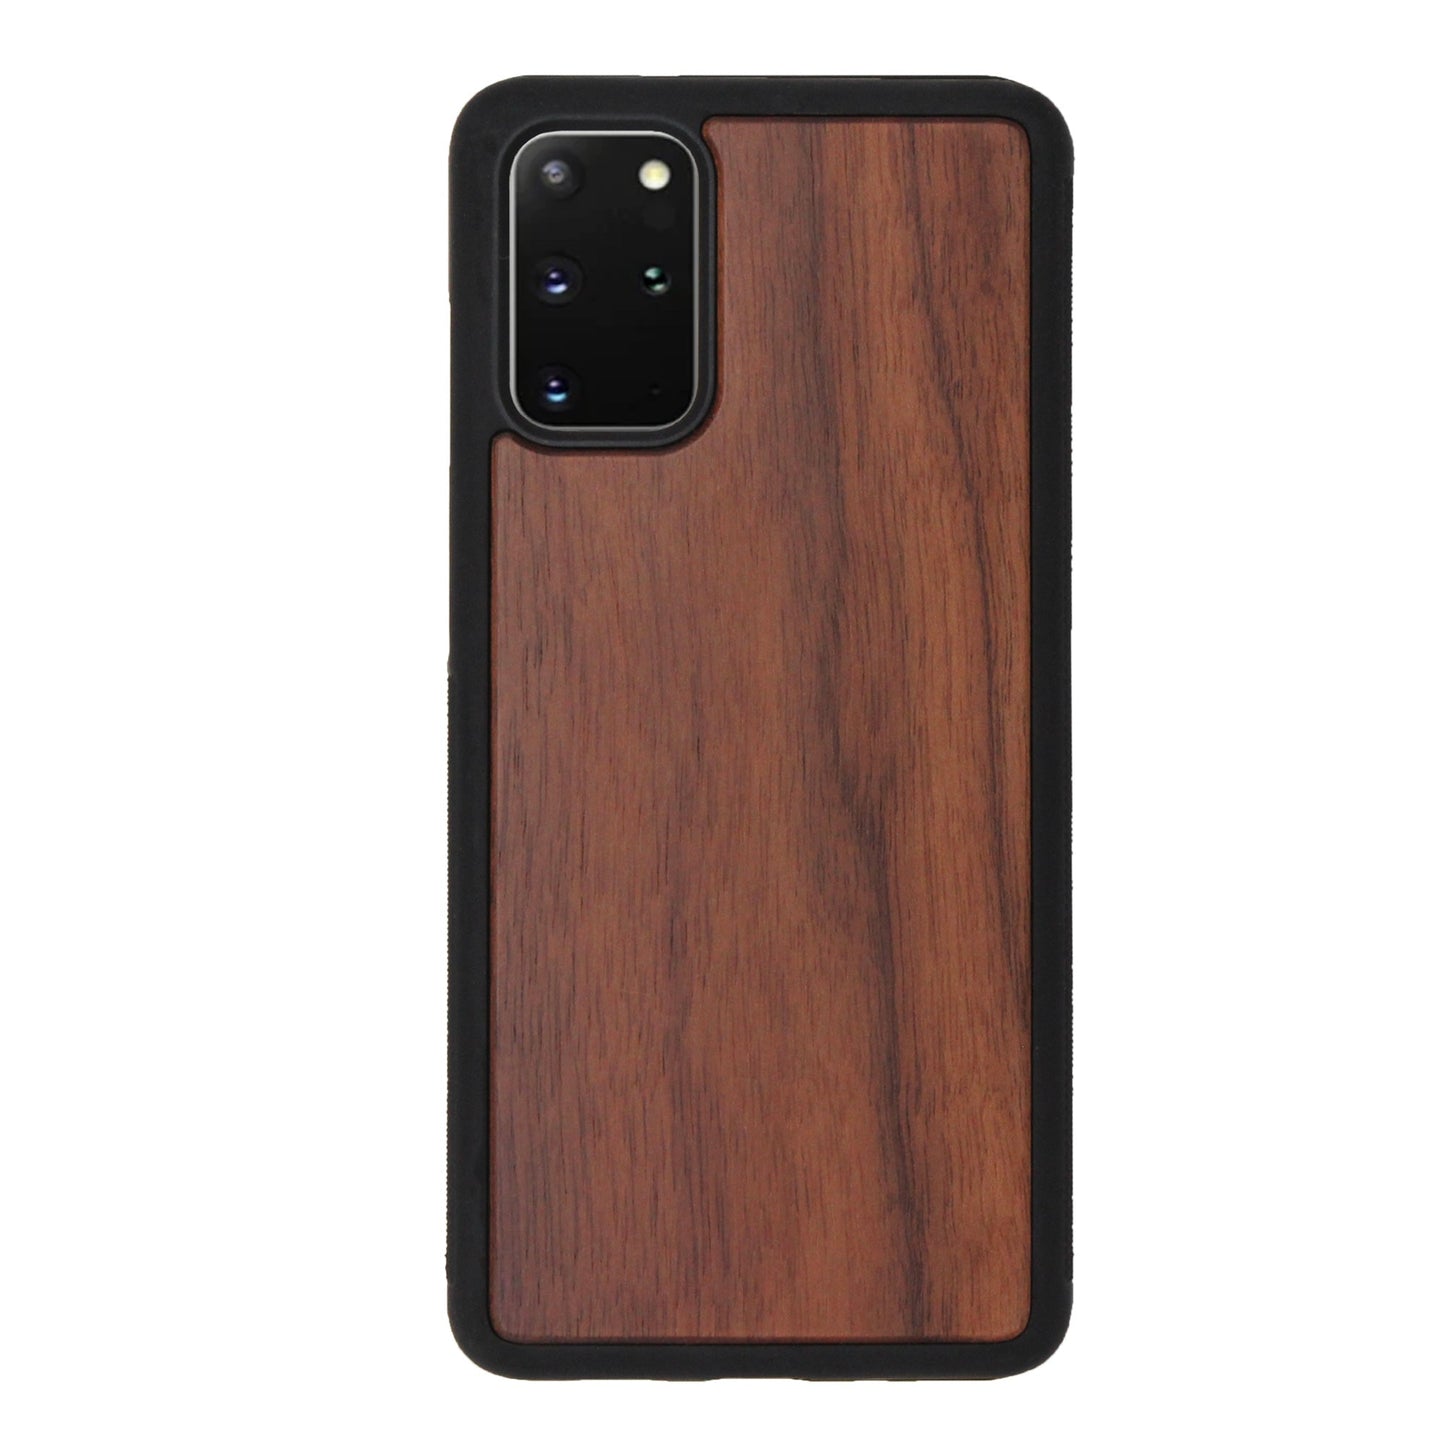 Eden case made of walnut wood for Samsung Galaxy S20 Plus